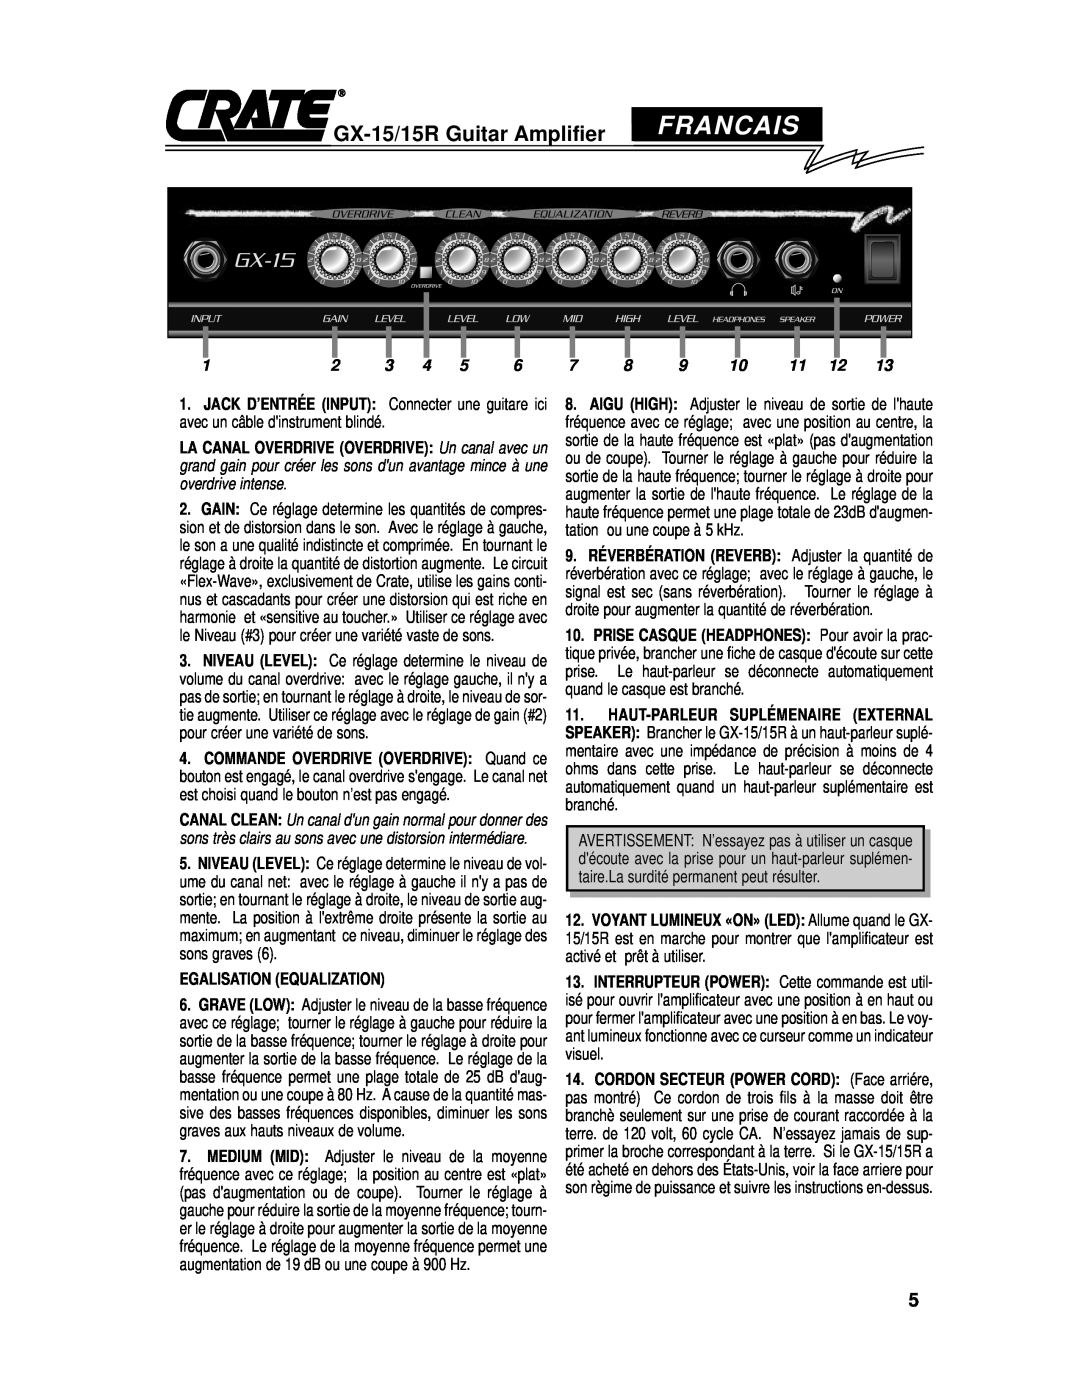 Crate Amplifiers GX-15R owner manual GX-15/15R Guitar Amplifier FRANCAIS 